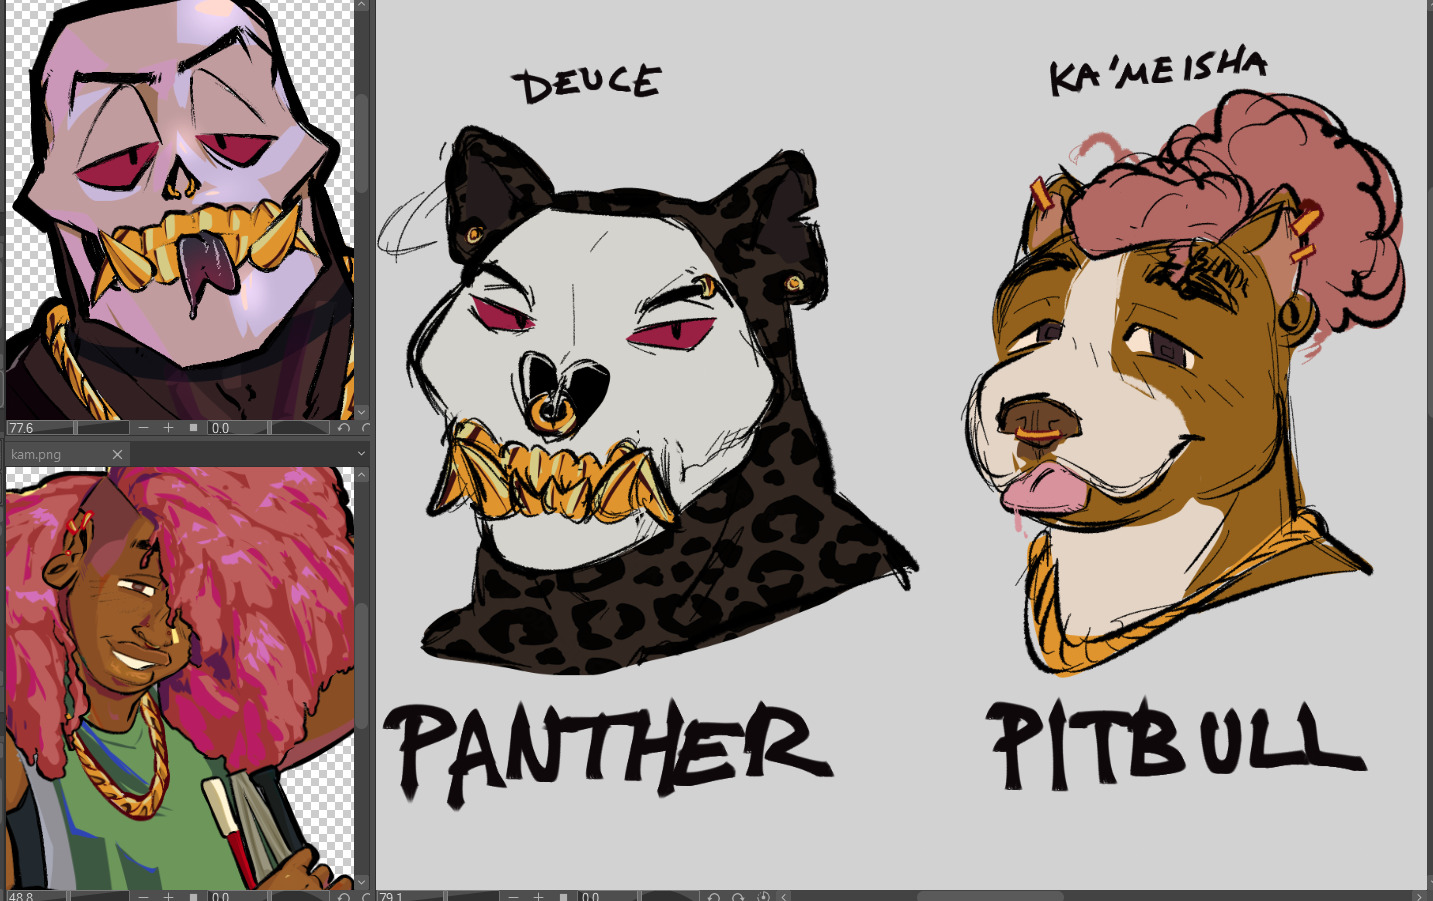 art of deuce and ka'meisha as furries. deuce is a panther, ka'meisha is a brown pitbull.